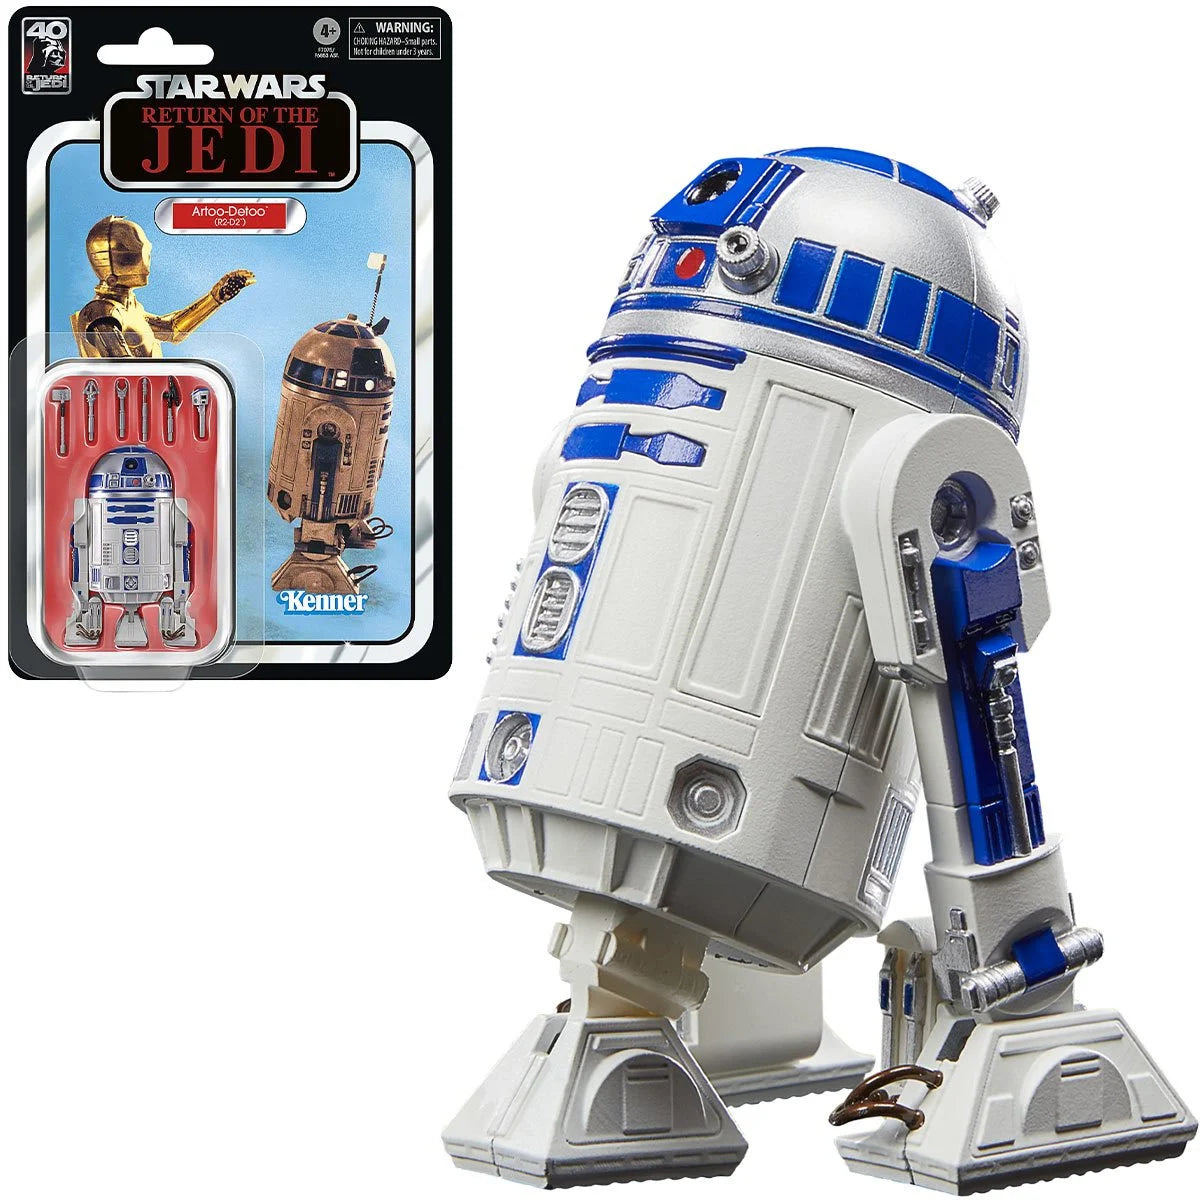 Star Wars The Black Series Return of the Jedi 40th Anniversary 6-Inch R2-D2